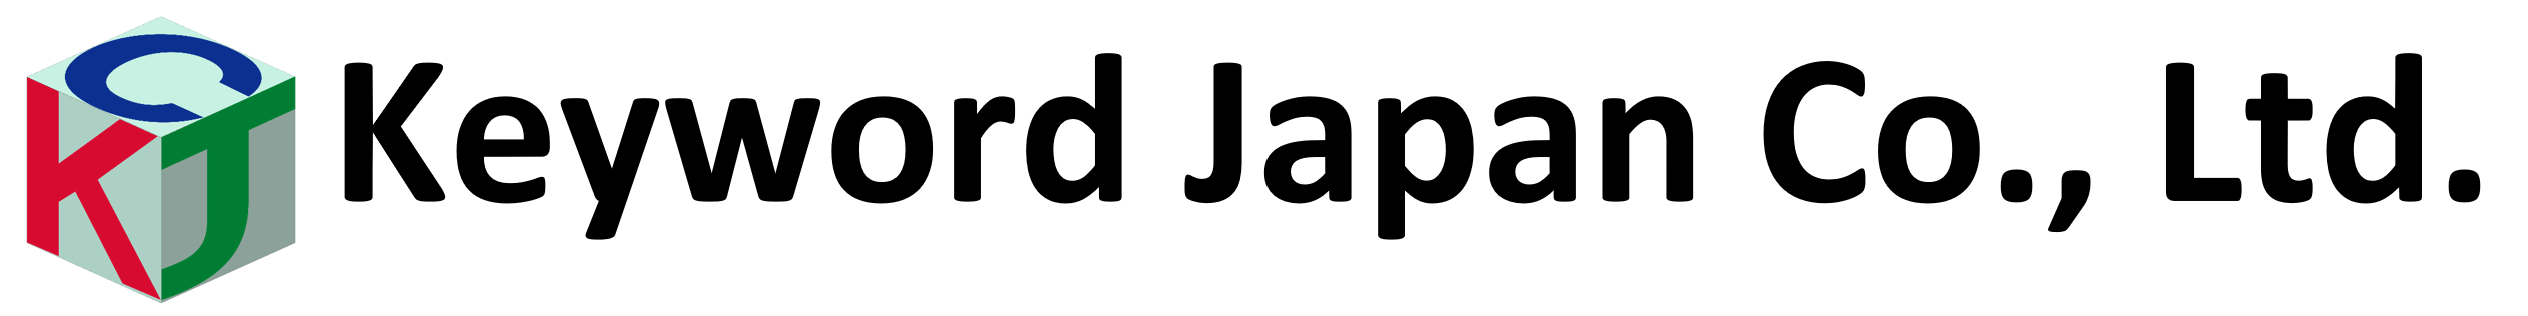 Keyword Japan Co.